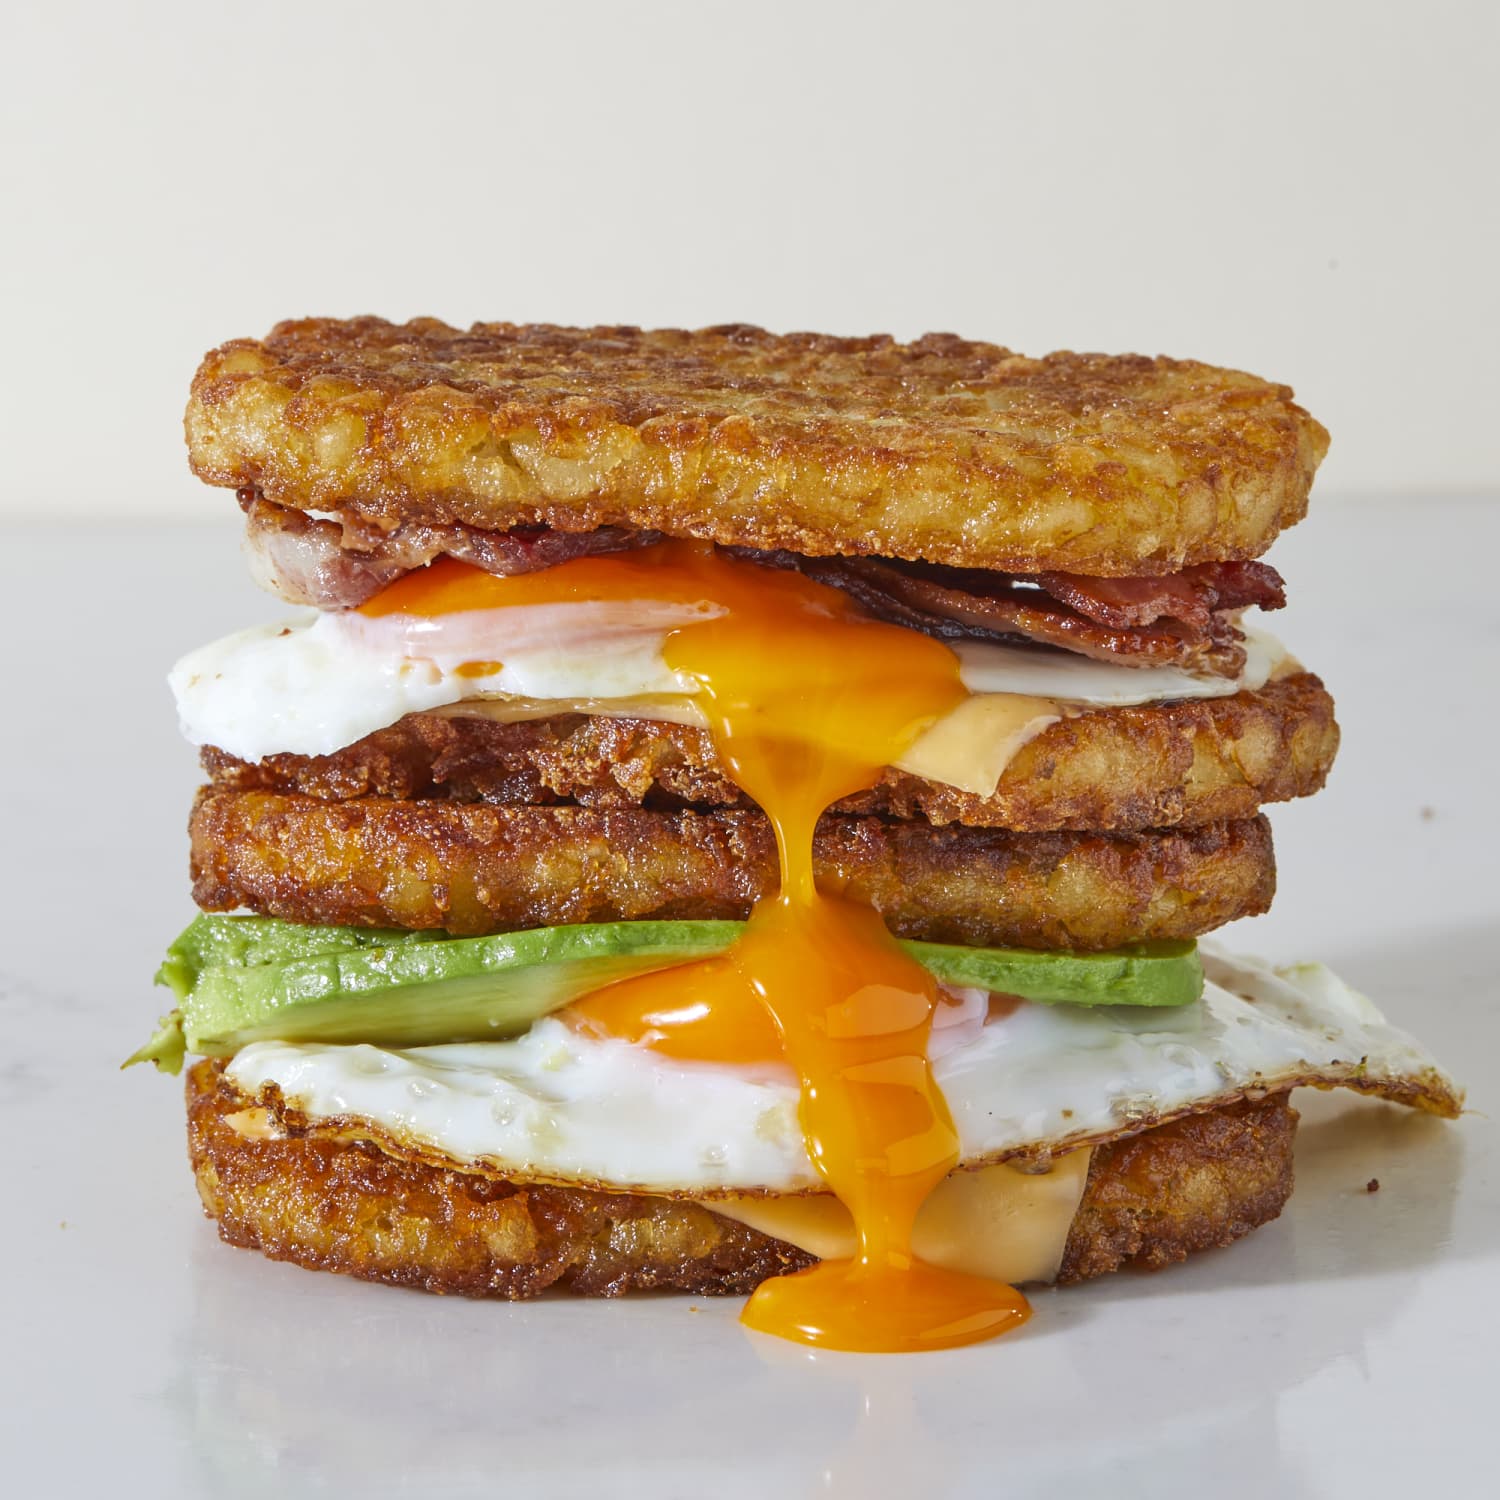 https://cdn.apartmenttherapy.info/image/upload/f_jpg,q_auto:eco,c_fill,g_auto,w_1500,ar_1:1/k%2F05-2023-Hashbrown-breakfast-sandwich%2Fhashbrown-bfast-sandwich-5232